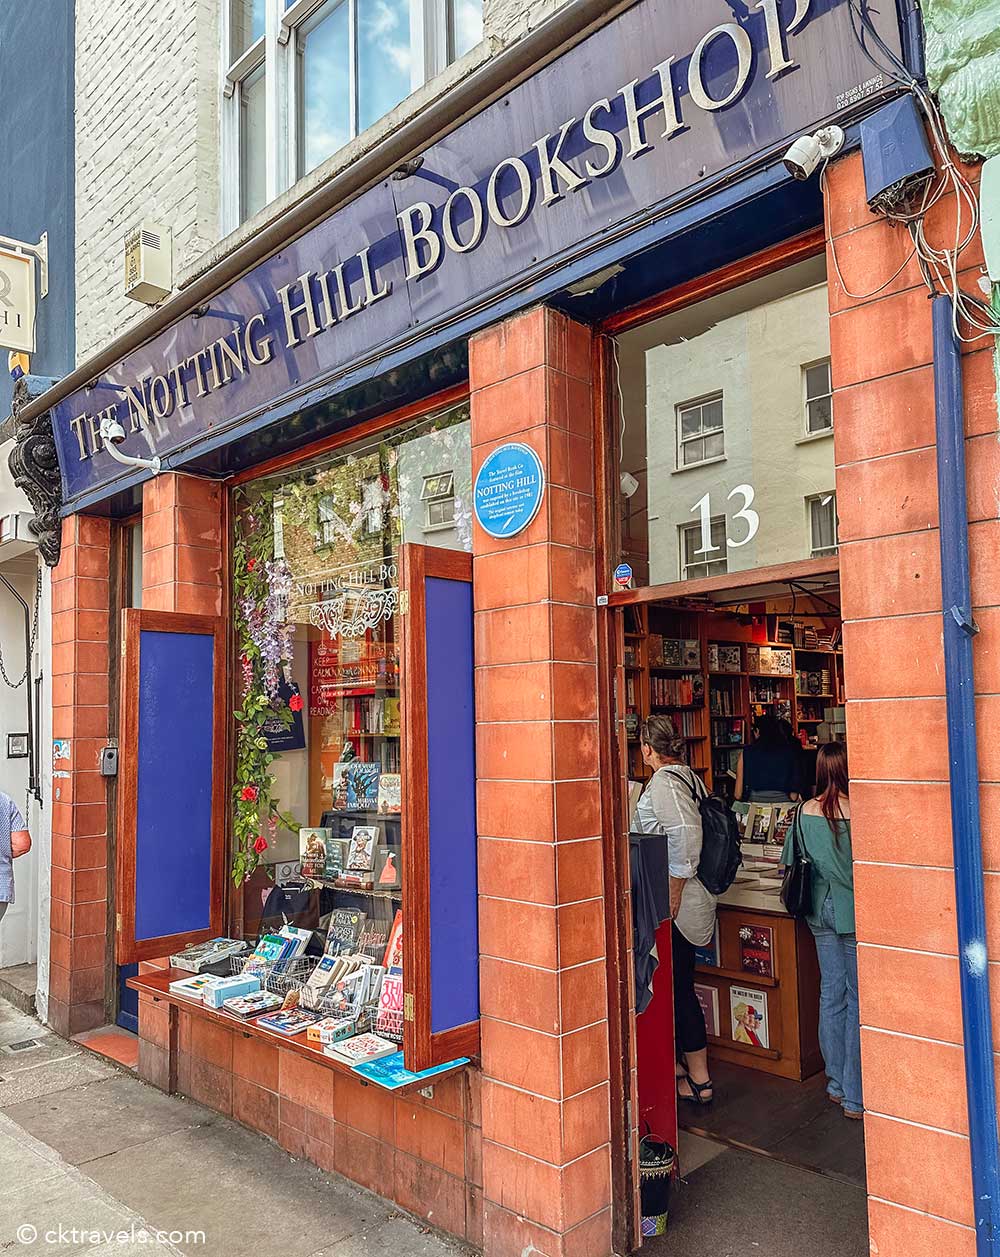 The Notting Hill Travel Bookshop, Blenheim Crescent